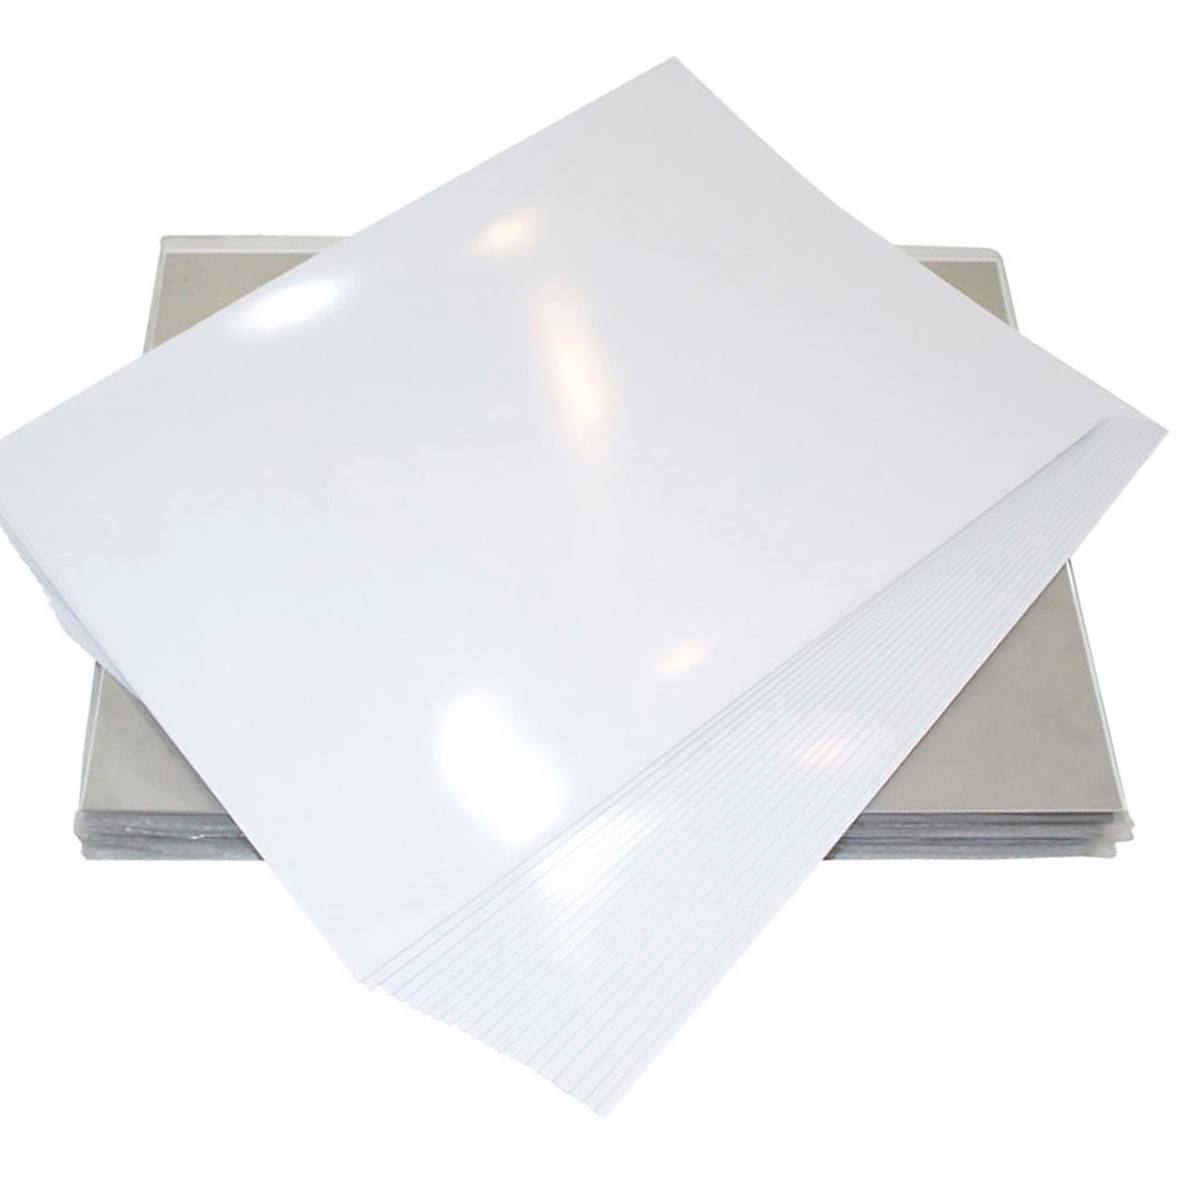 Papel Adesivo Fotográfico 115g A4 Branco Brilhante Resistente à Água / 500 folhas